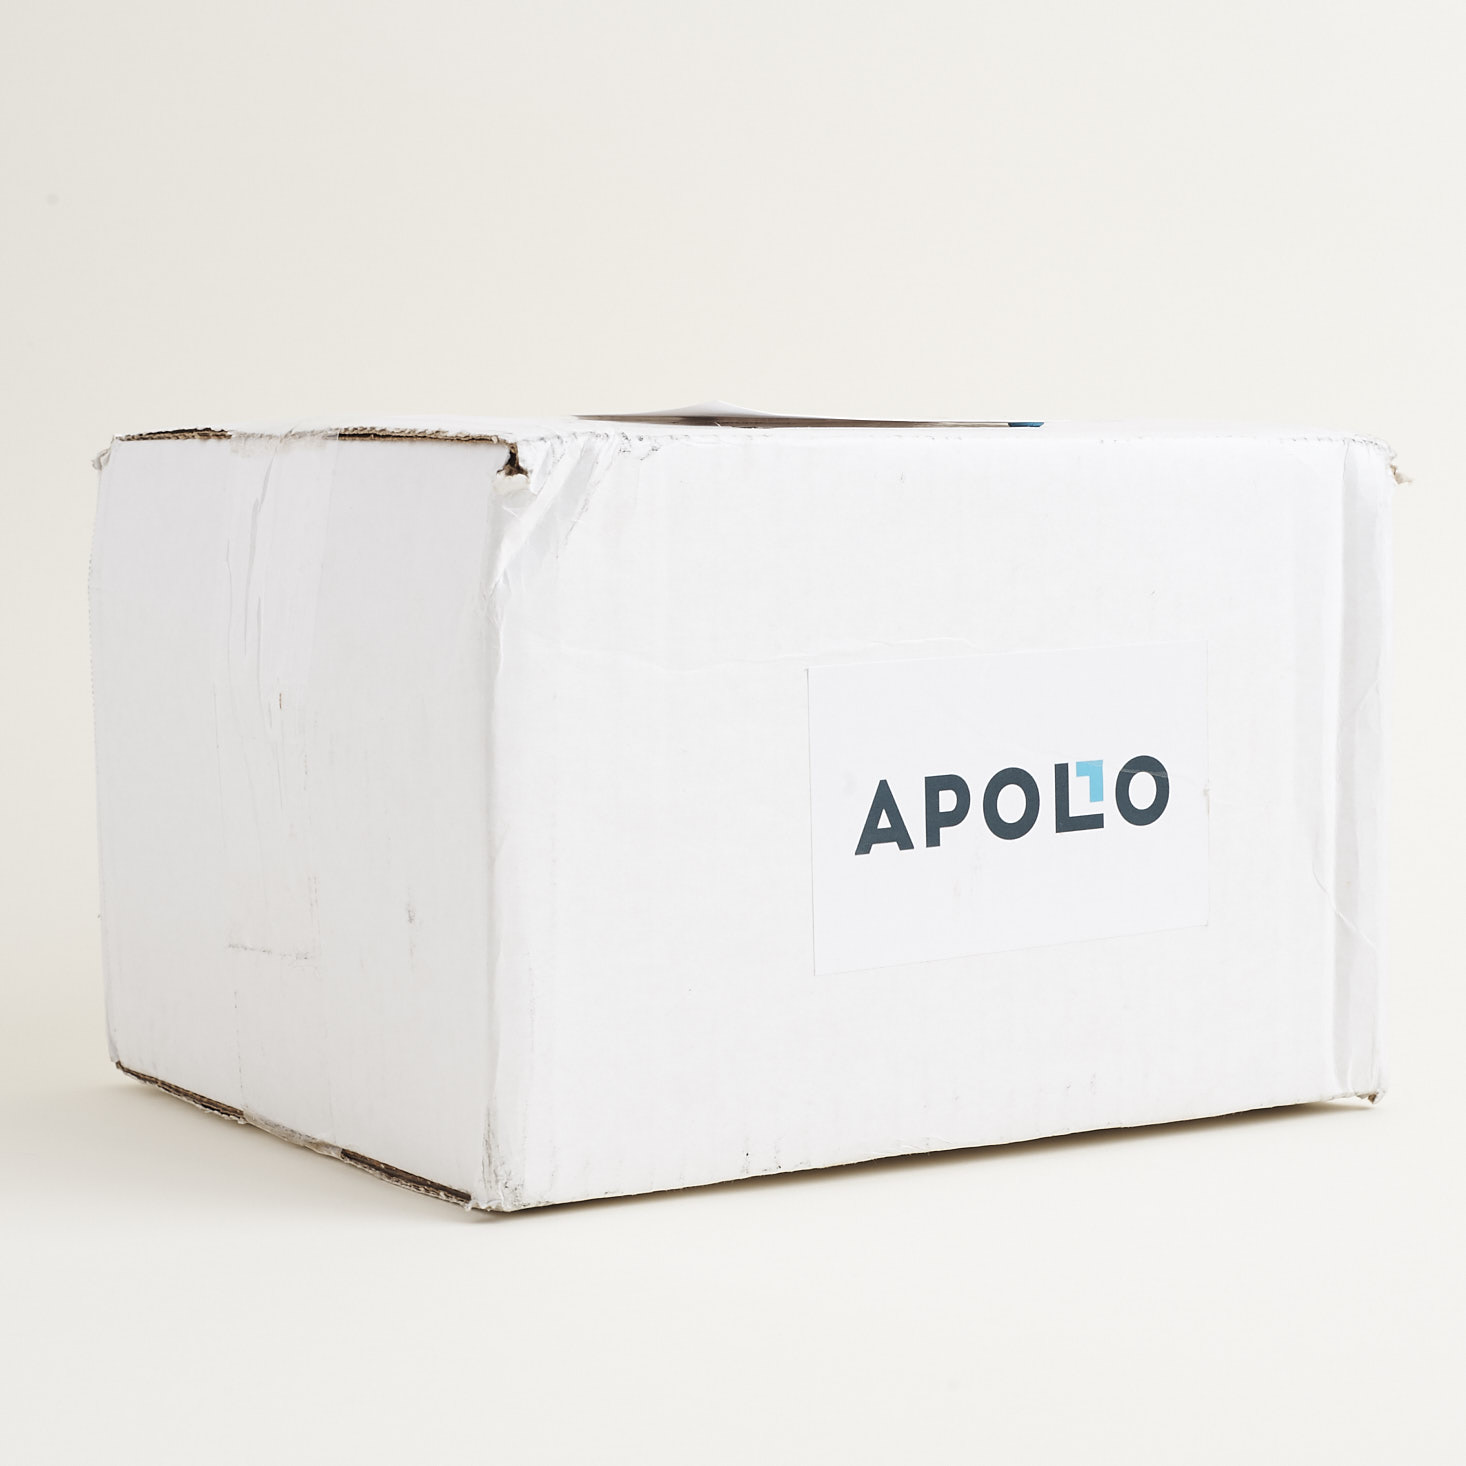 Apollo Surprise Box Review + Coupon – October 2017